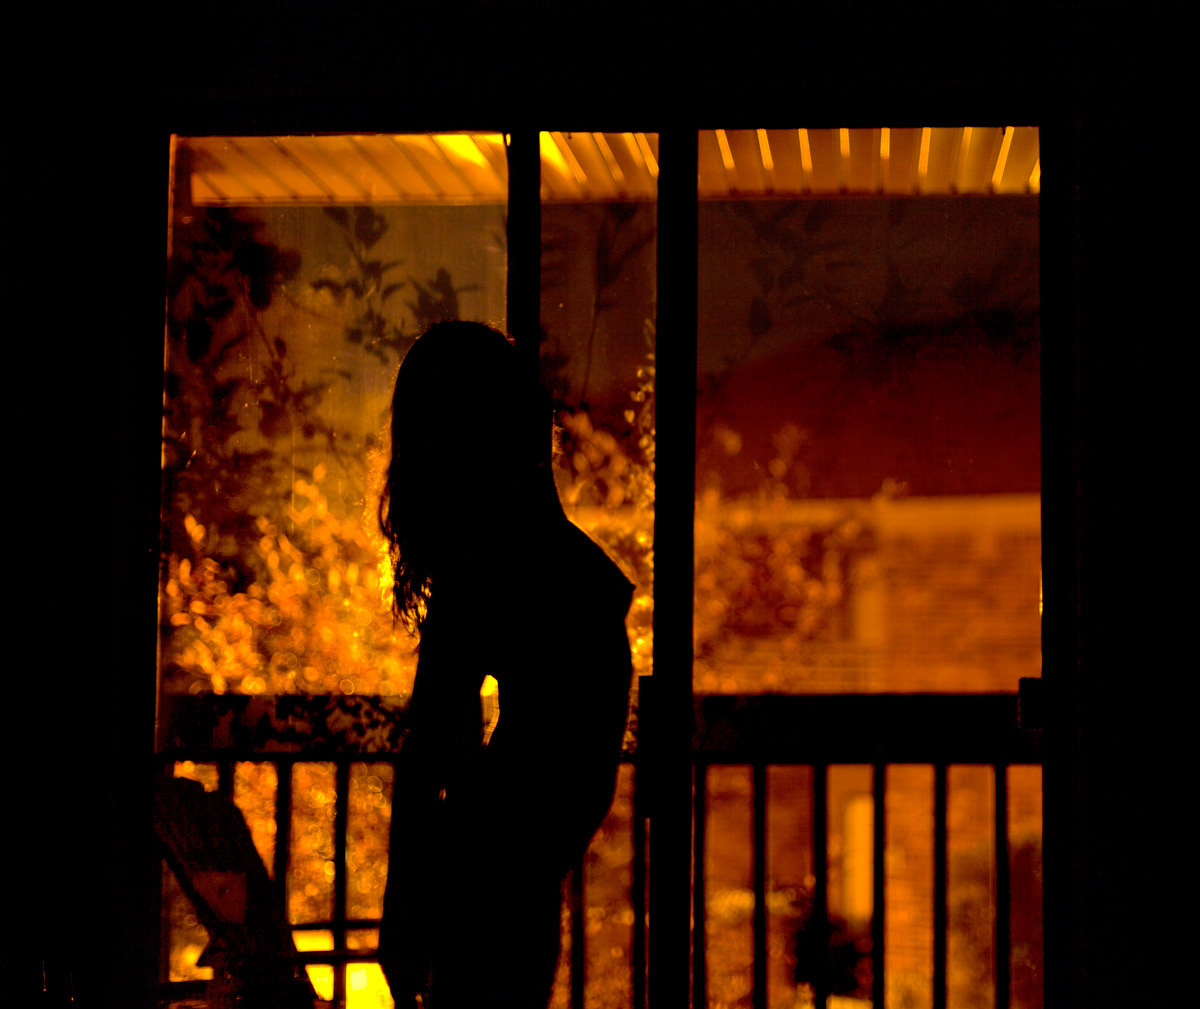 sleep night dark Silhouette portrait self art